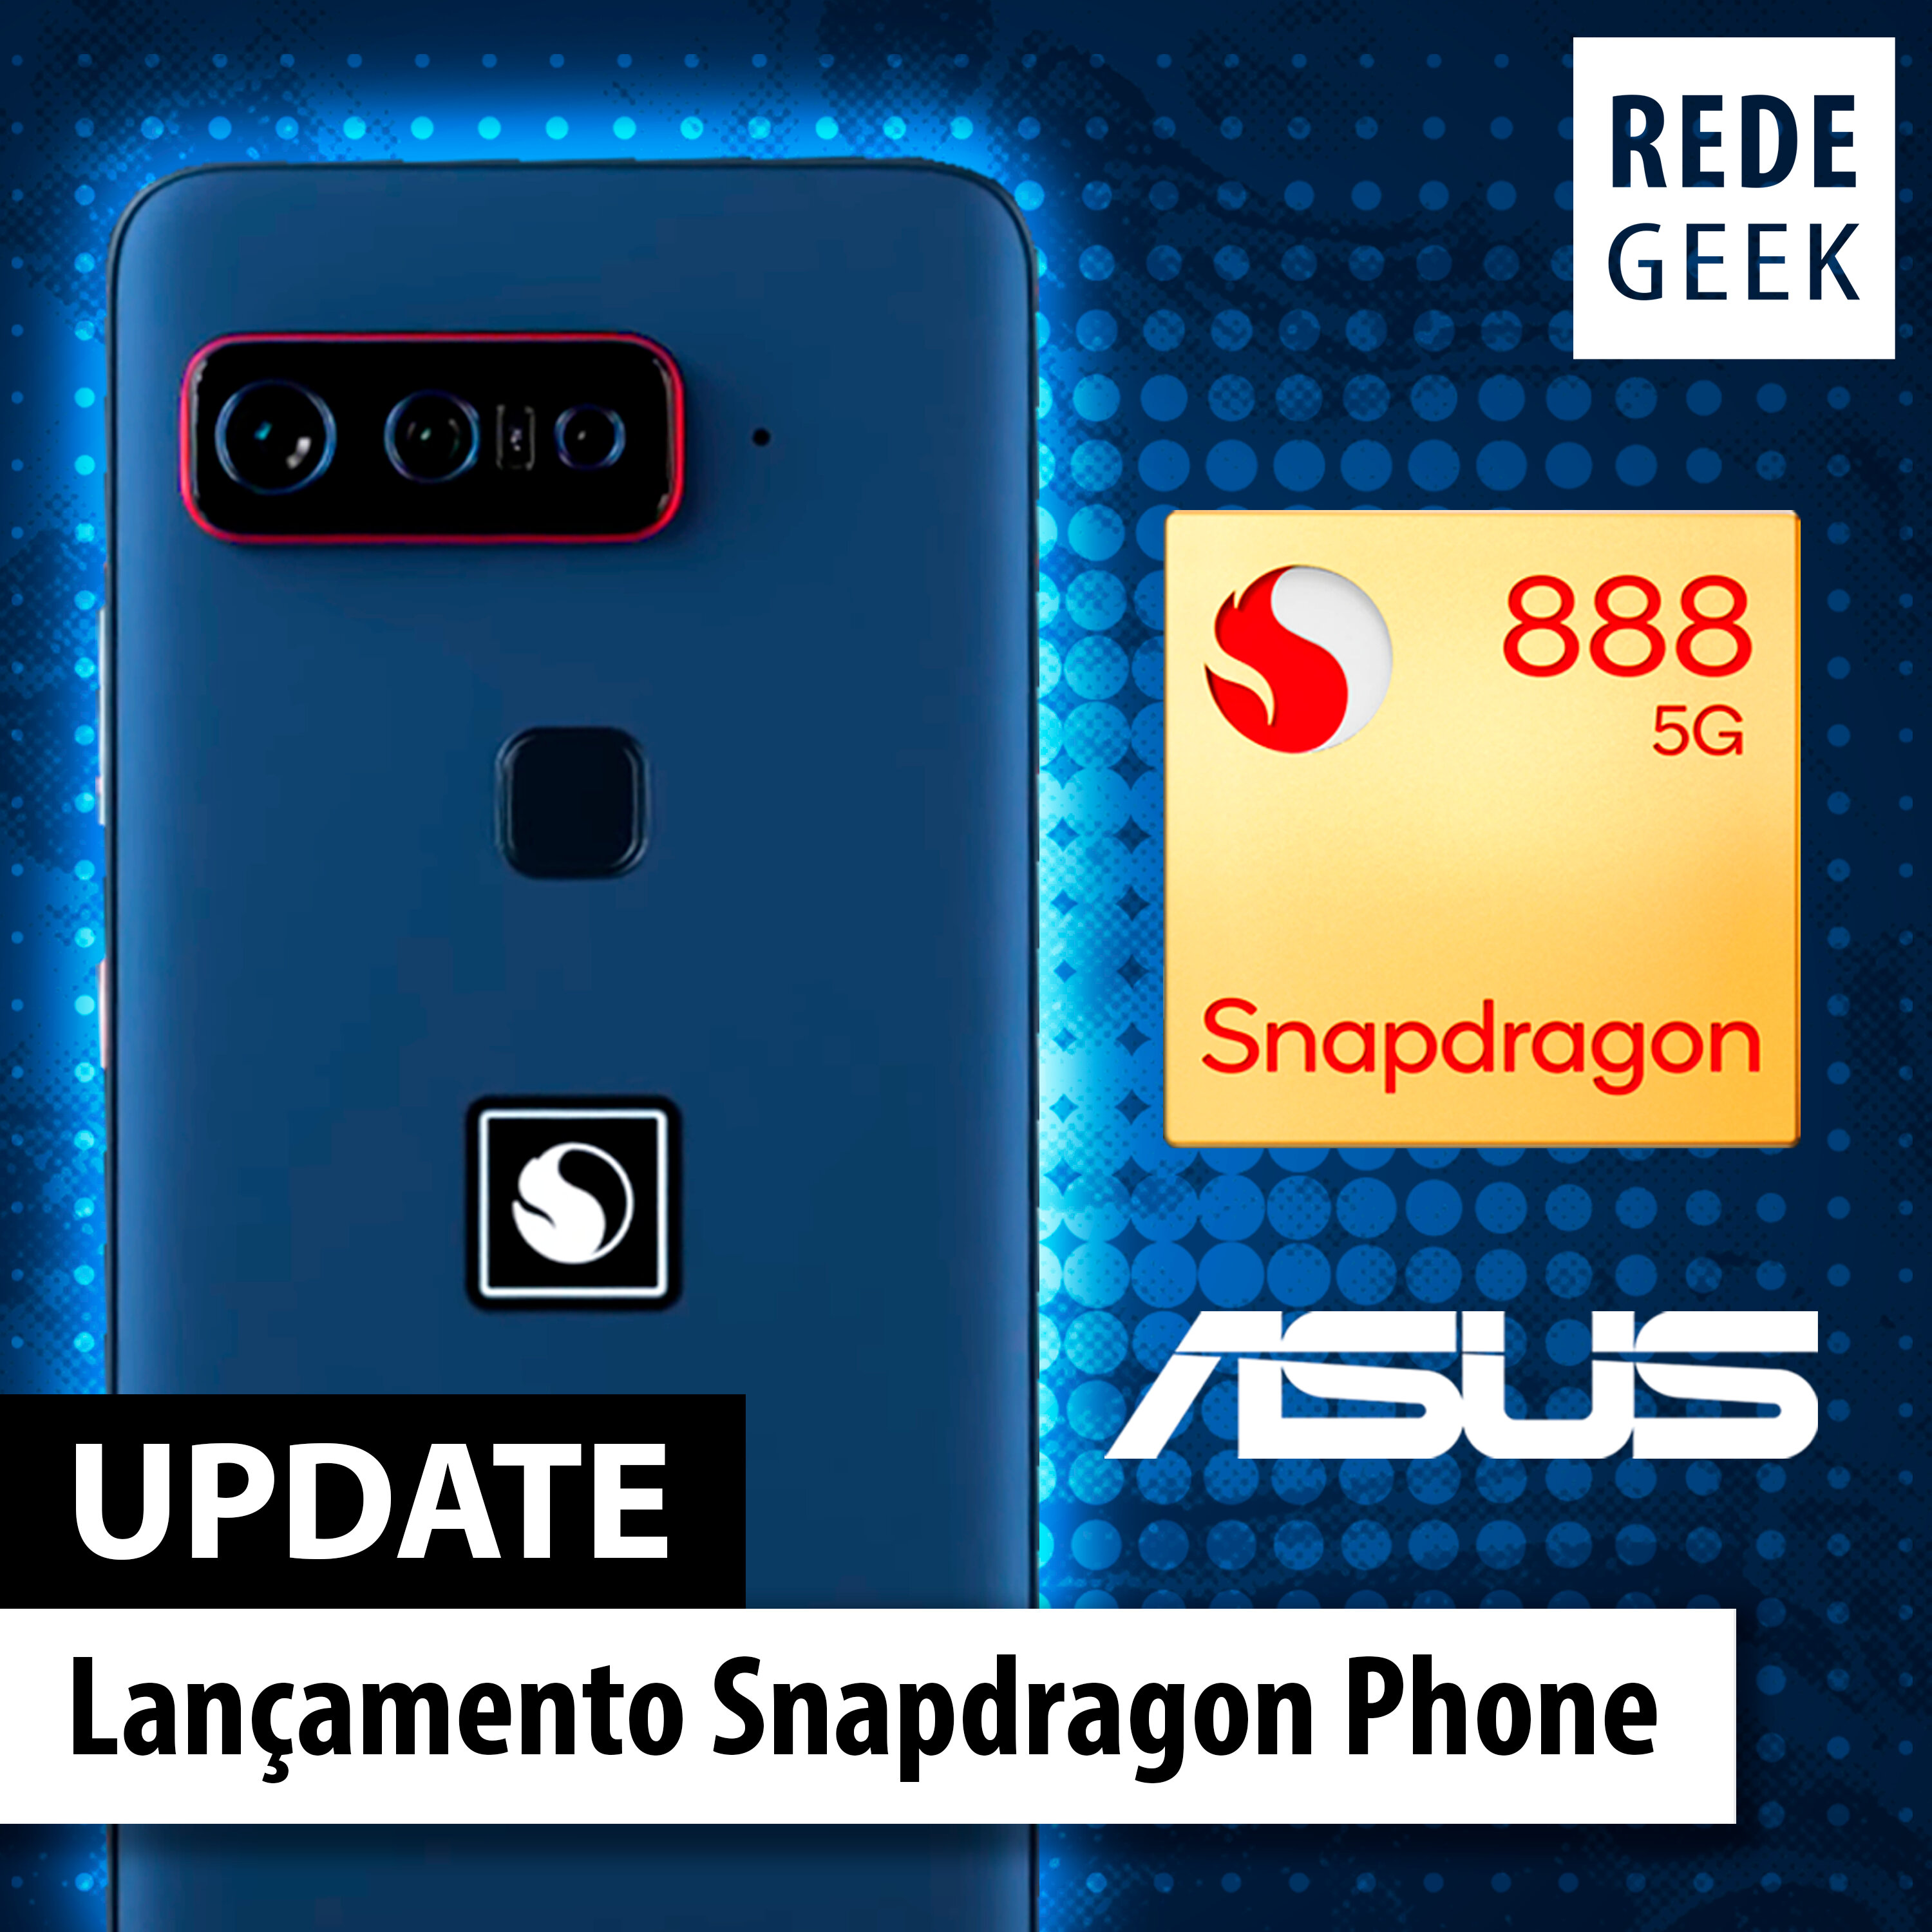 UPDATE -  Lançamento Snapdragon Phone